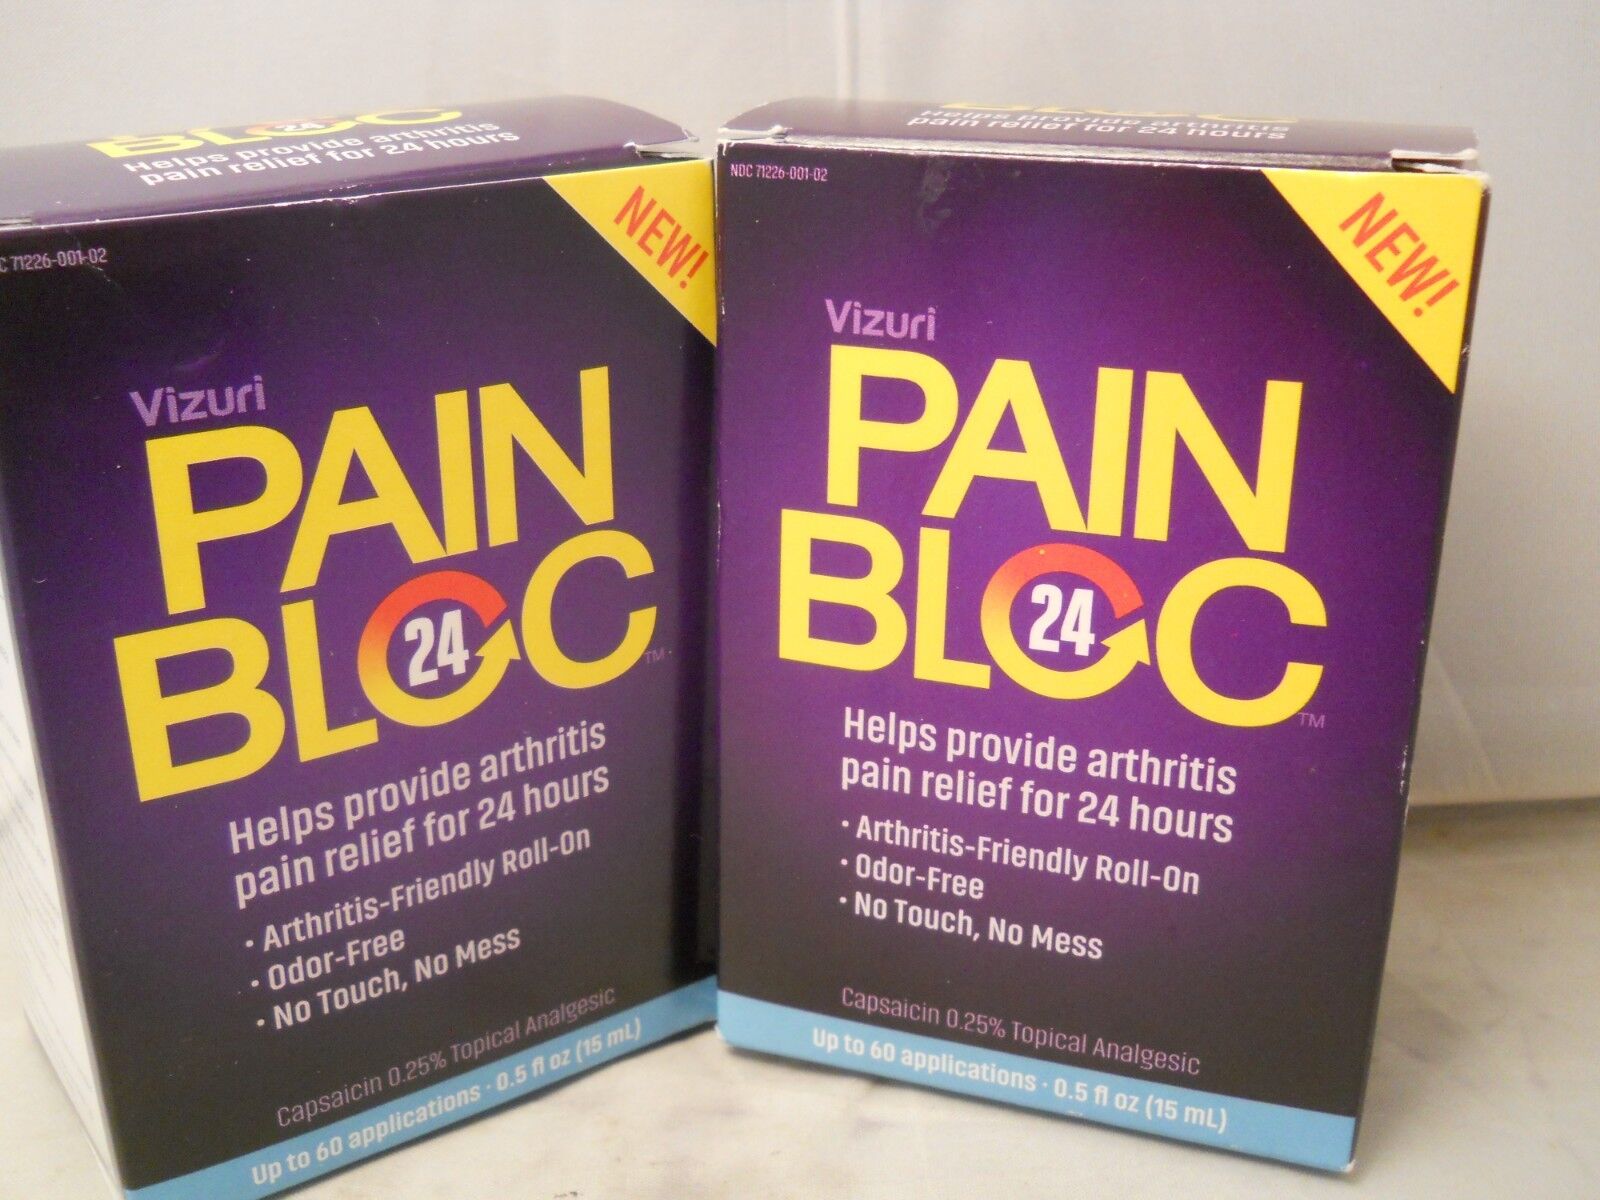  Vizuri Pain Bloc Arthritis Pain Relief for 24 Hours  (2PK BUNDLE) fresh & new